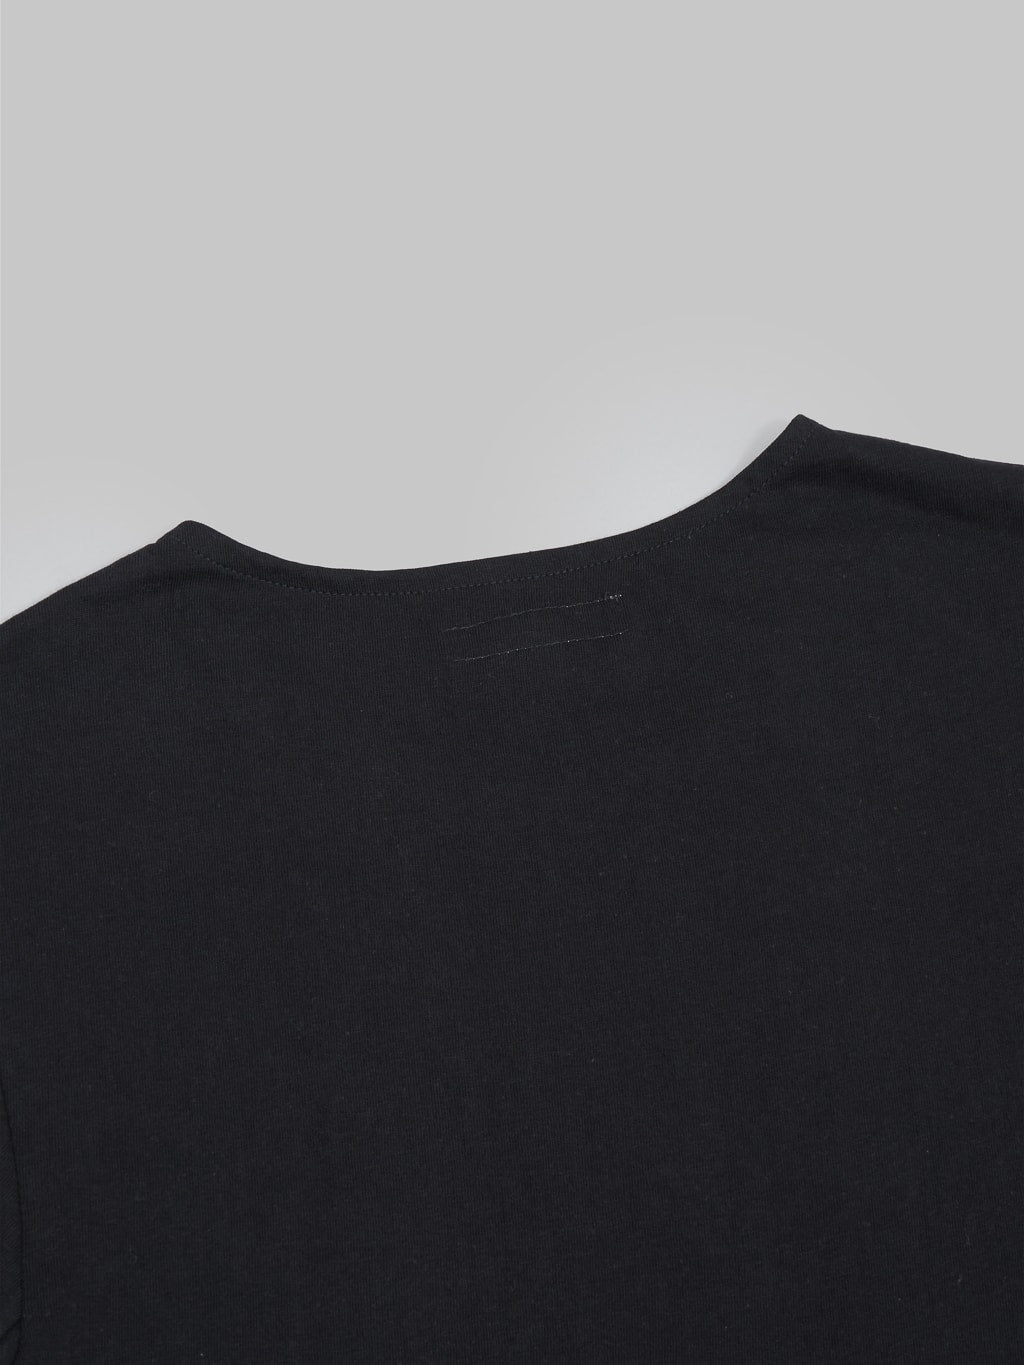 Merz b Schwanen 114 Loopwheeled TShirt black classic fit  fabric